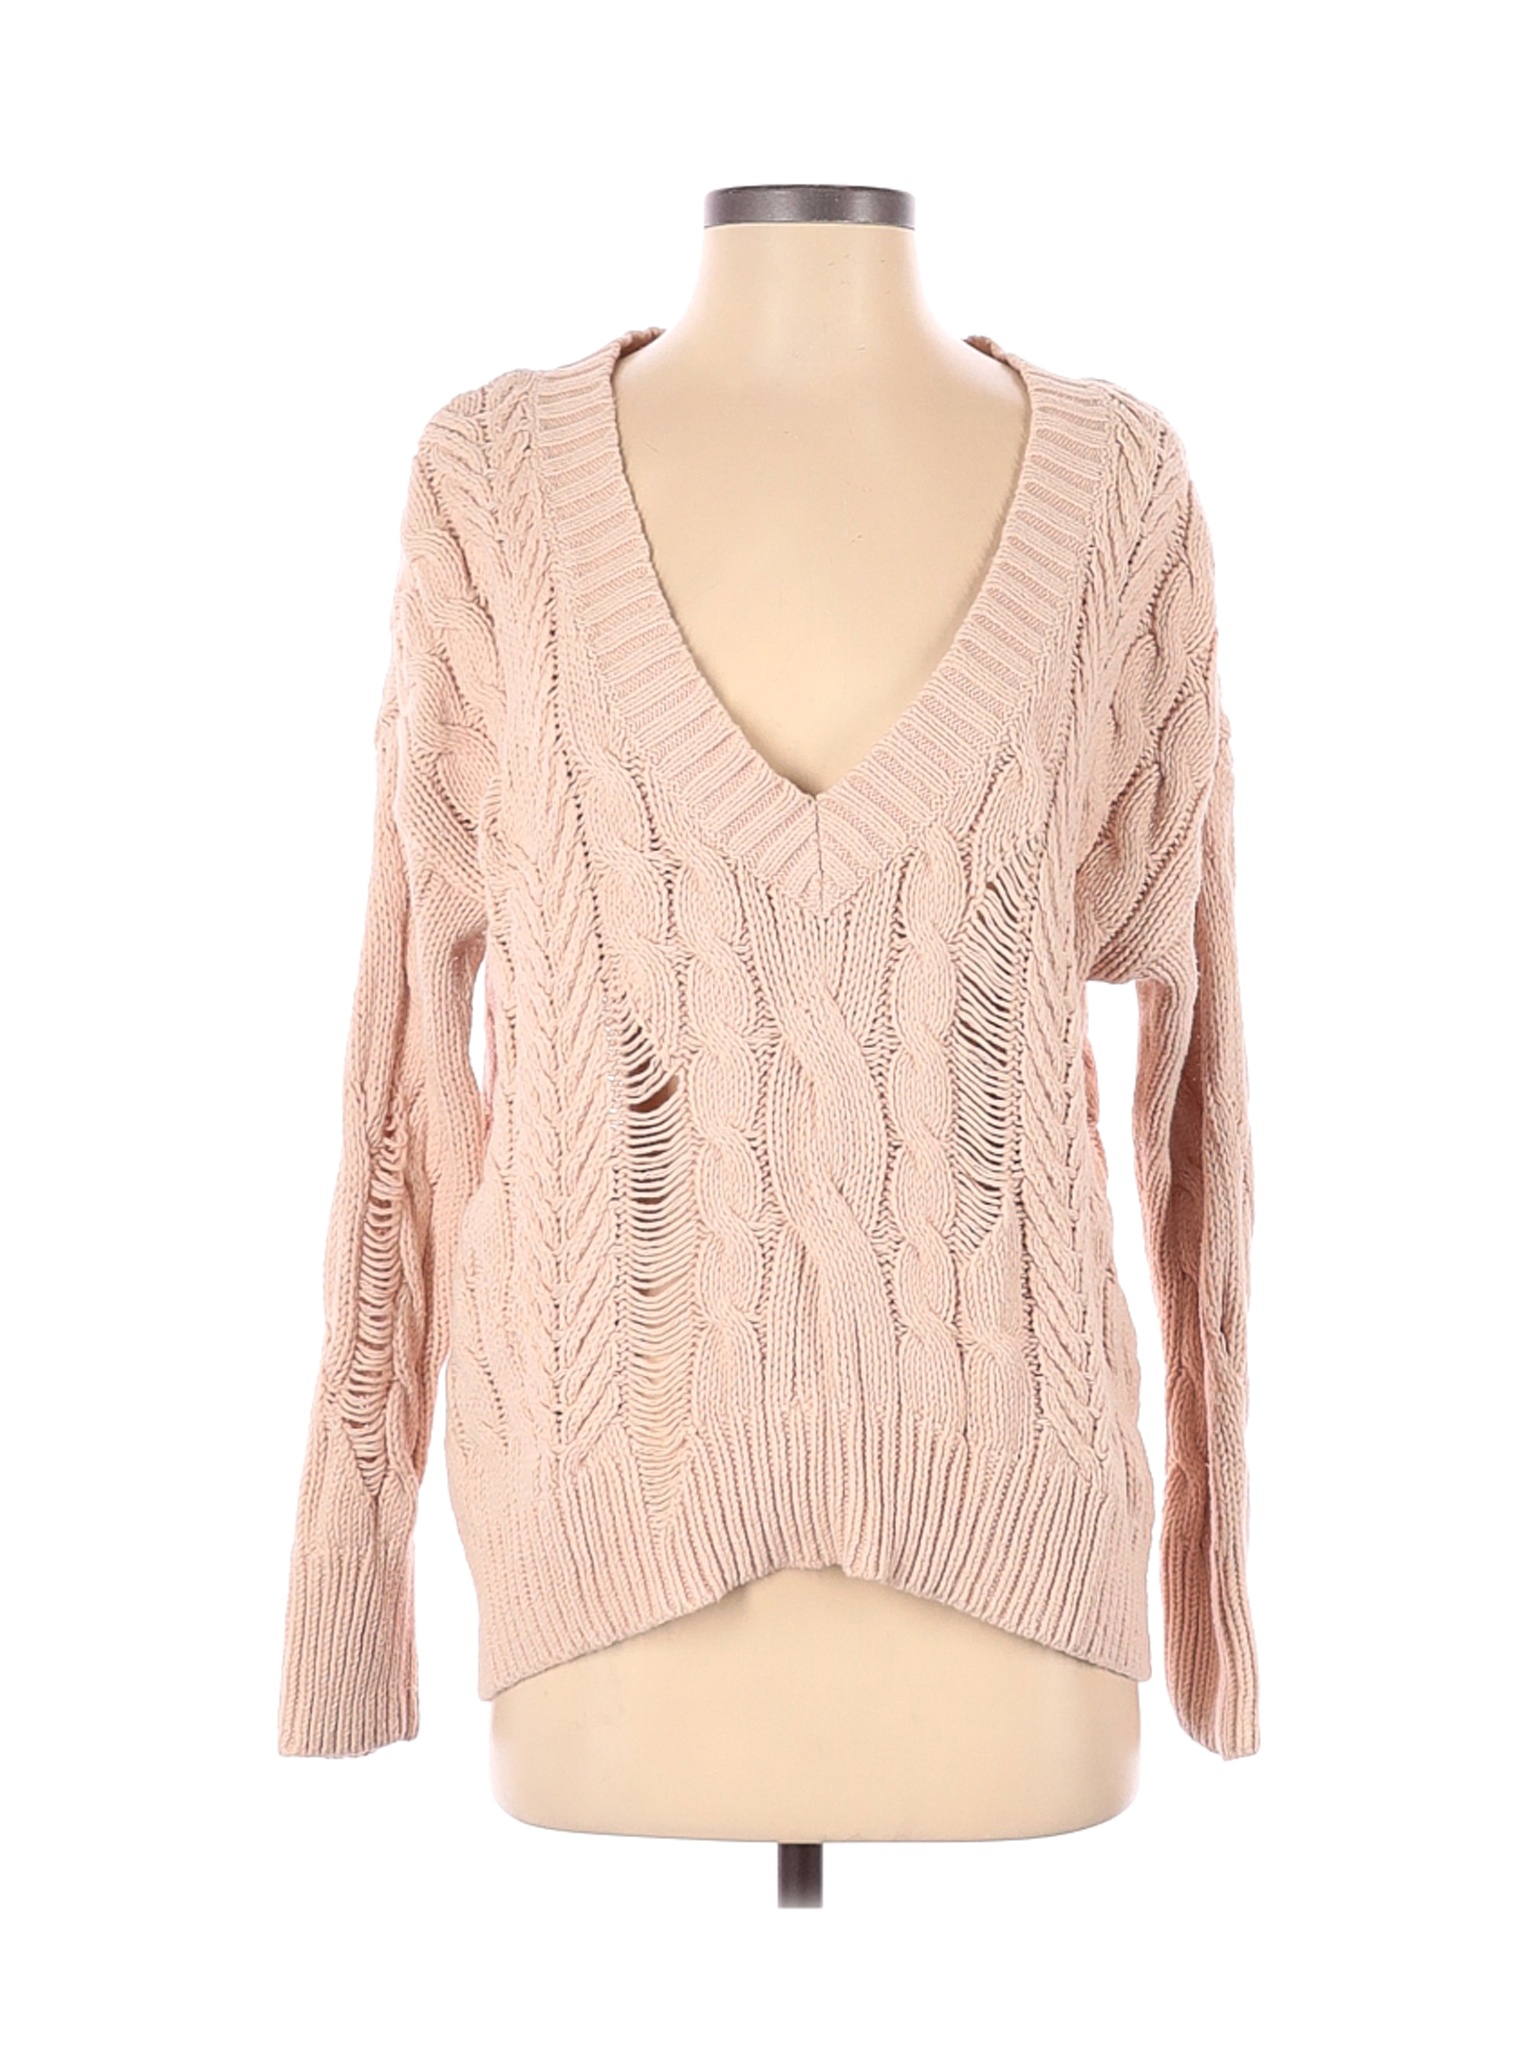 Express Women Brown Pullover Sweater S | eBay